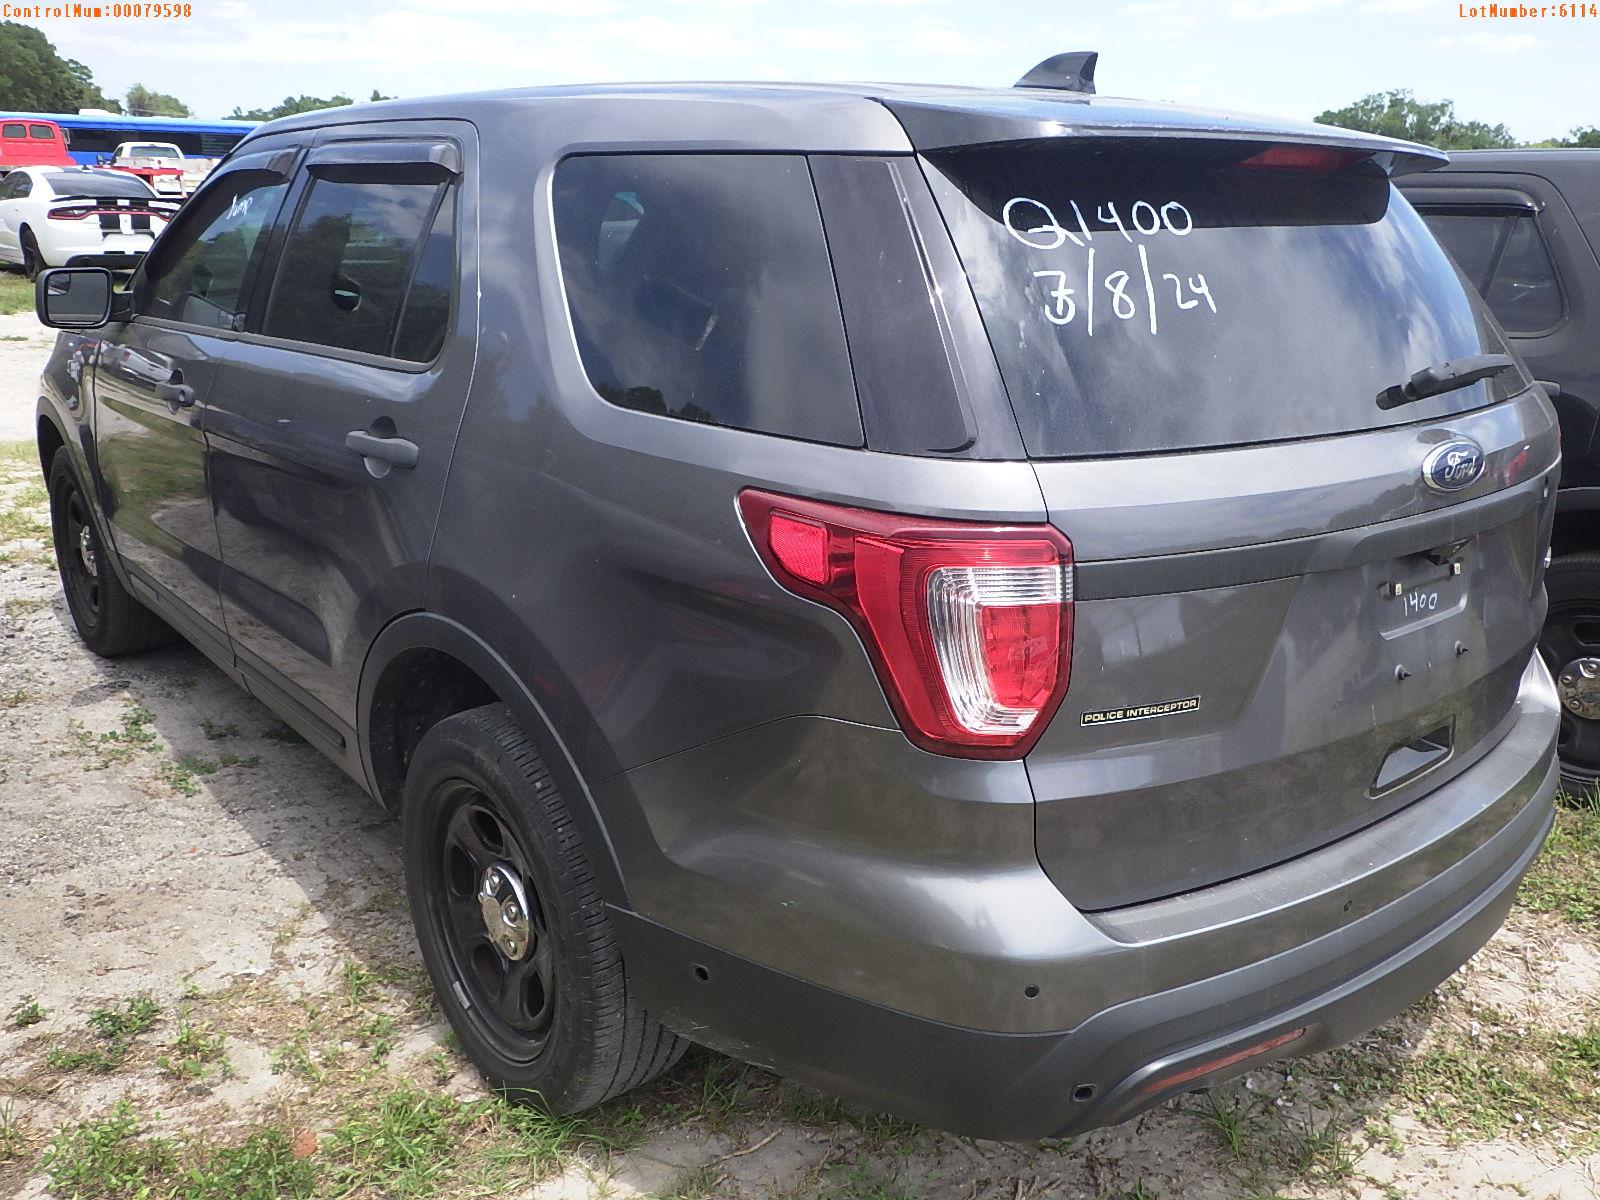 5-06114 (Cars-SUV 4D)  Seller: Florida State F.H.P. 2016 FORD EXPLORER